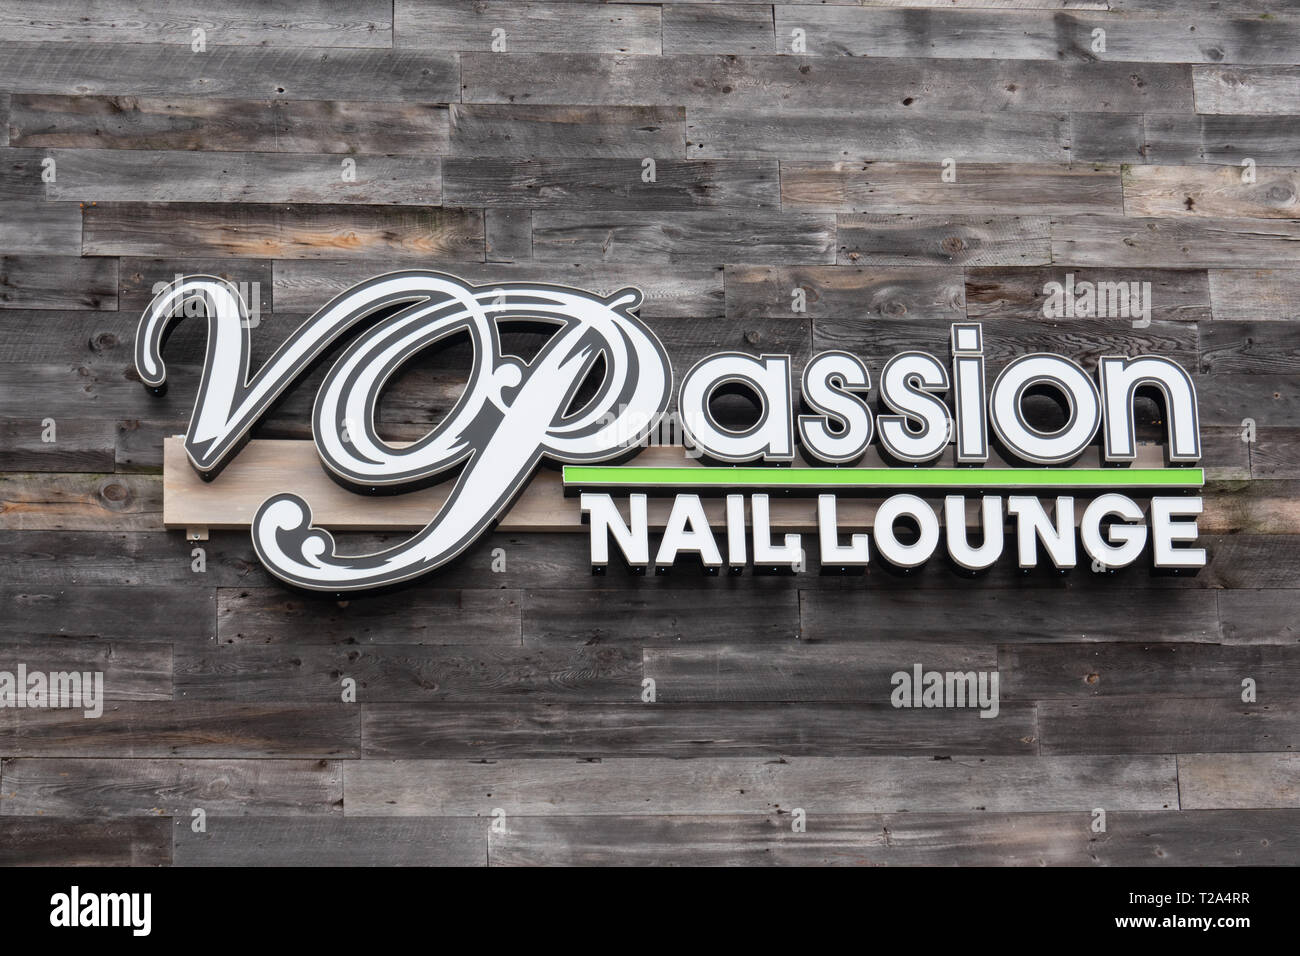 Passion nail lounge